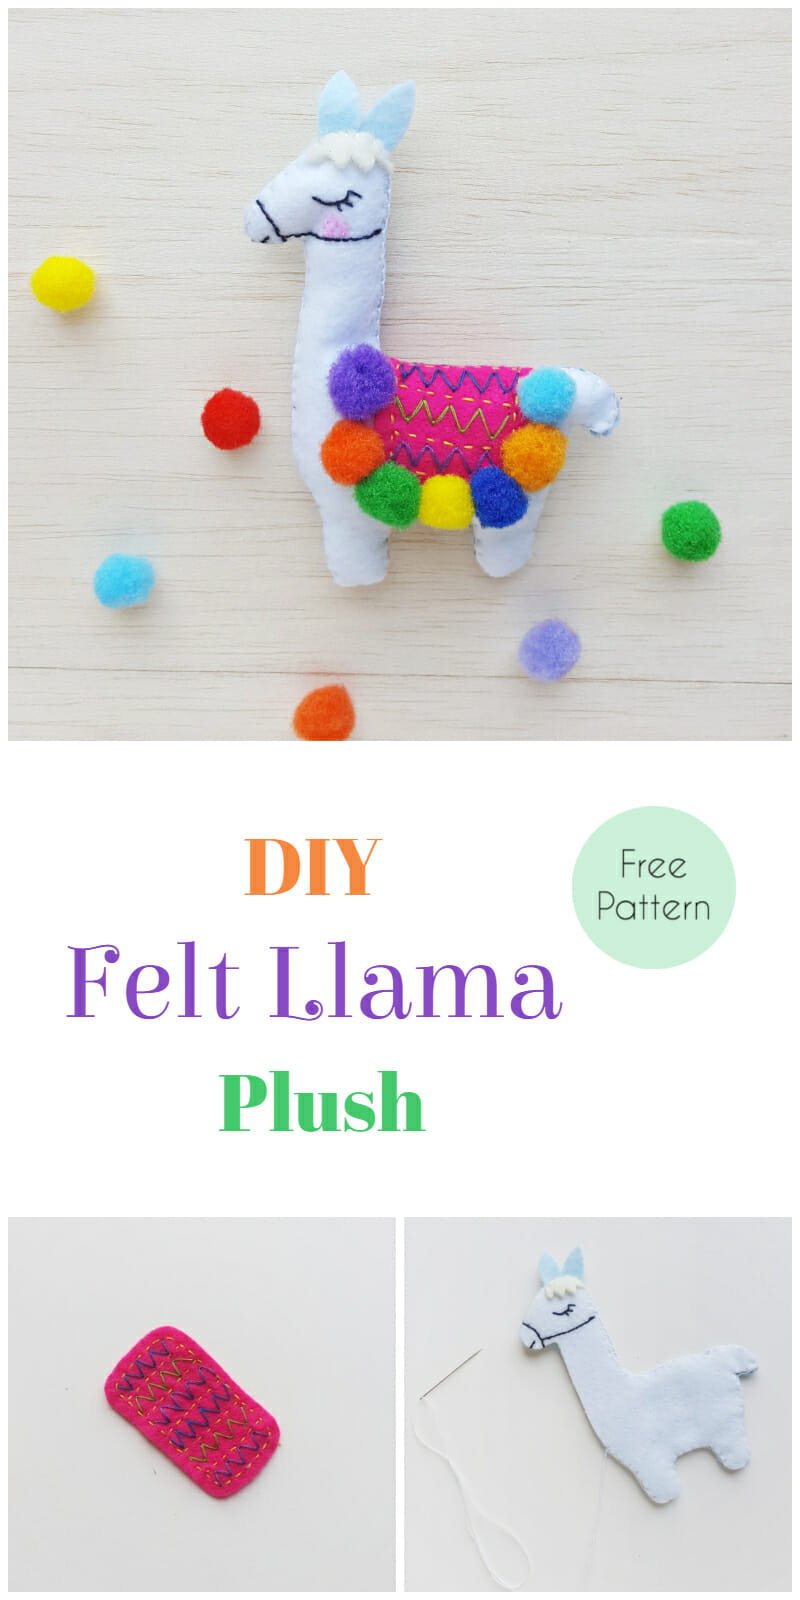 Llama Pinty Image - DIY Felt Llama Plush - Free Pattern